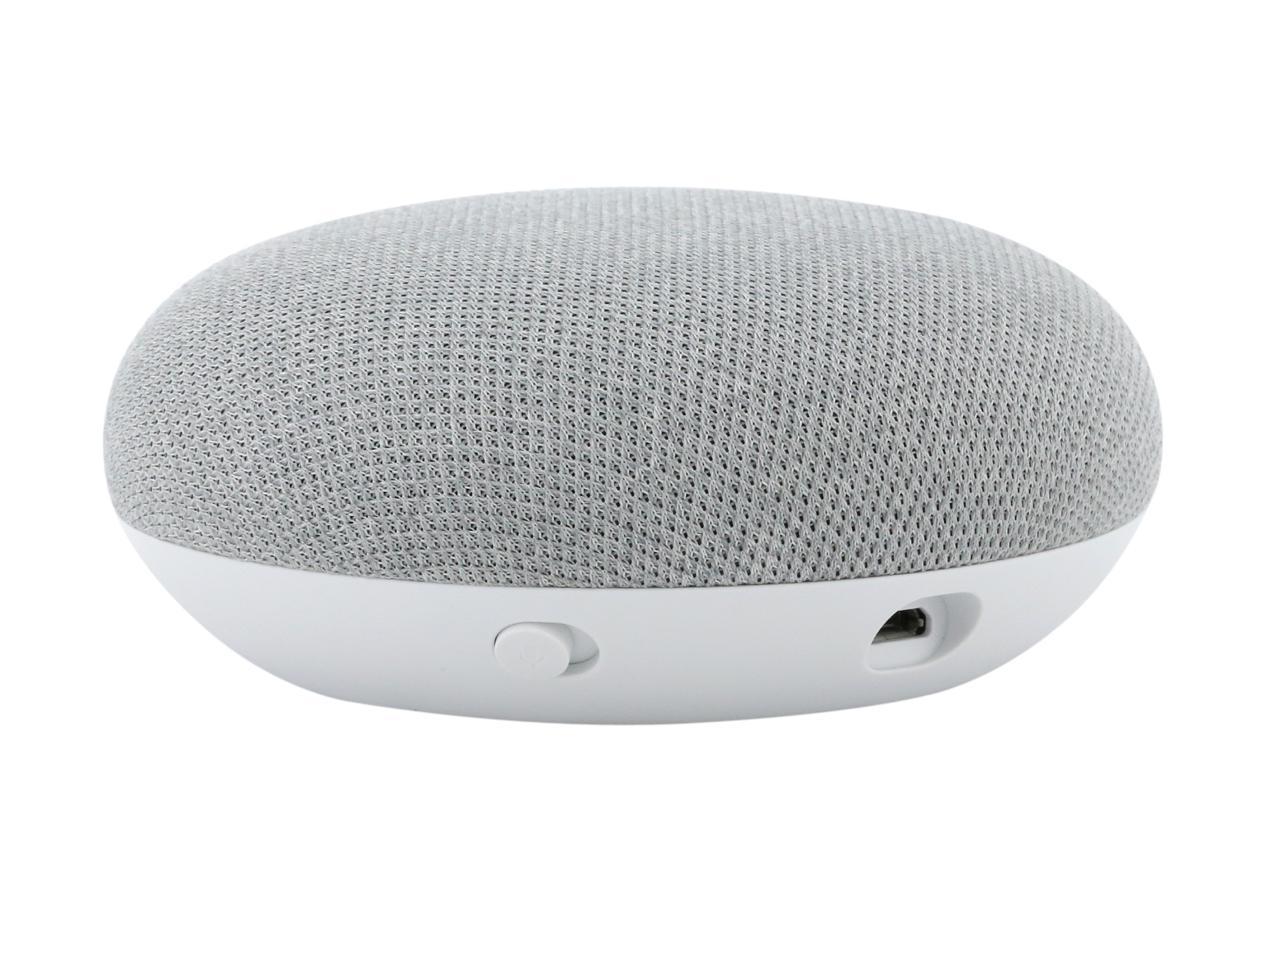 GA00210-US Chalk Google Home Mini Smart Speaker with Google Assistant for sale online